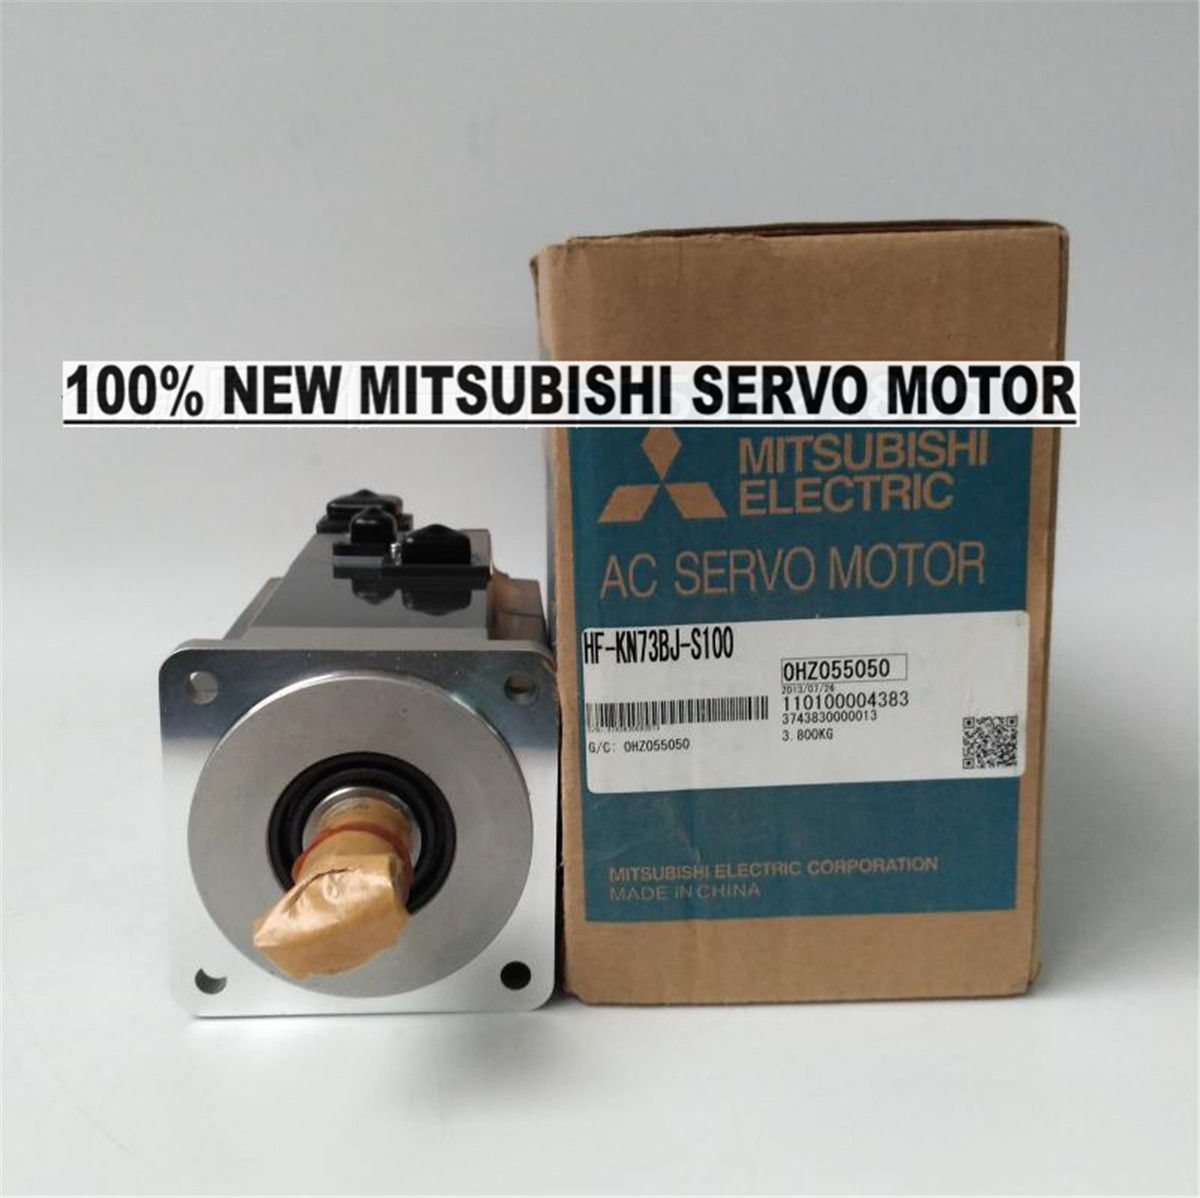 NEW Mitsubishi Servo Motor HF-KN73BJ-S100 in box HFKN73BJS100